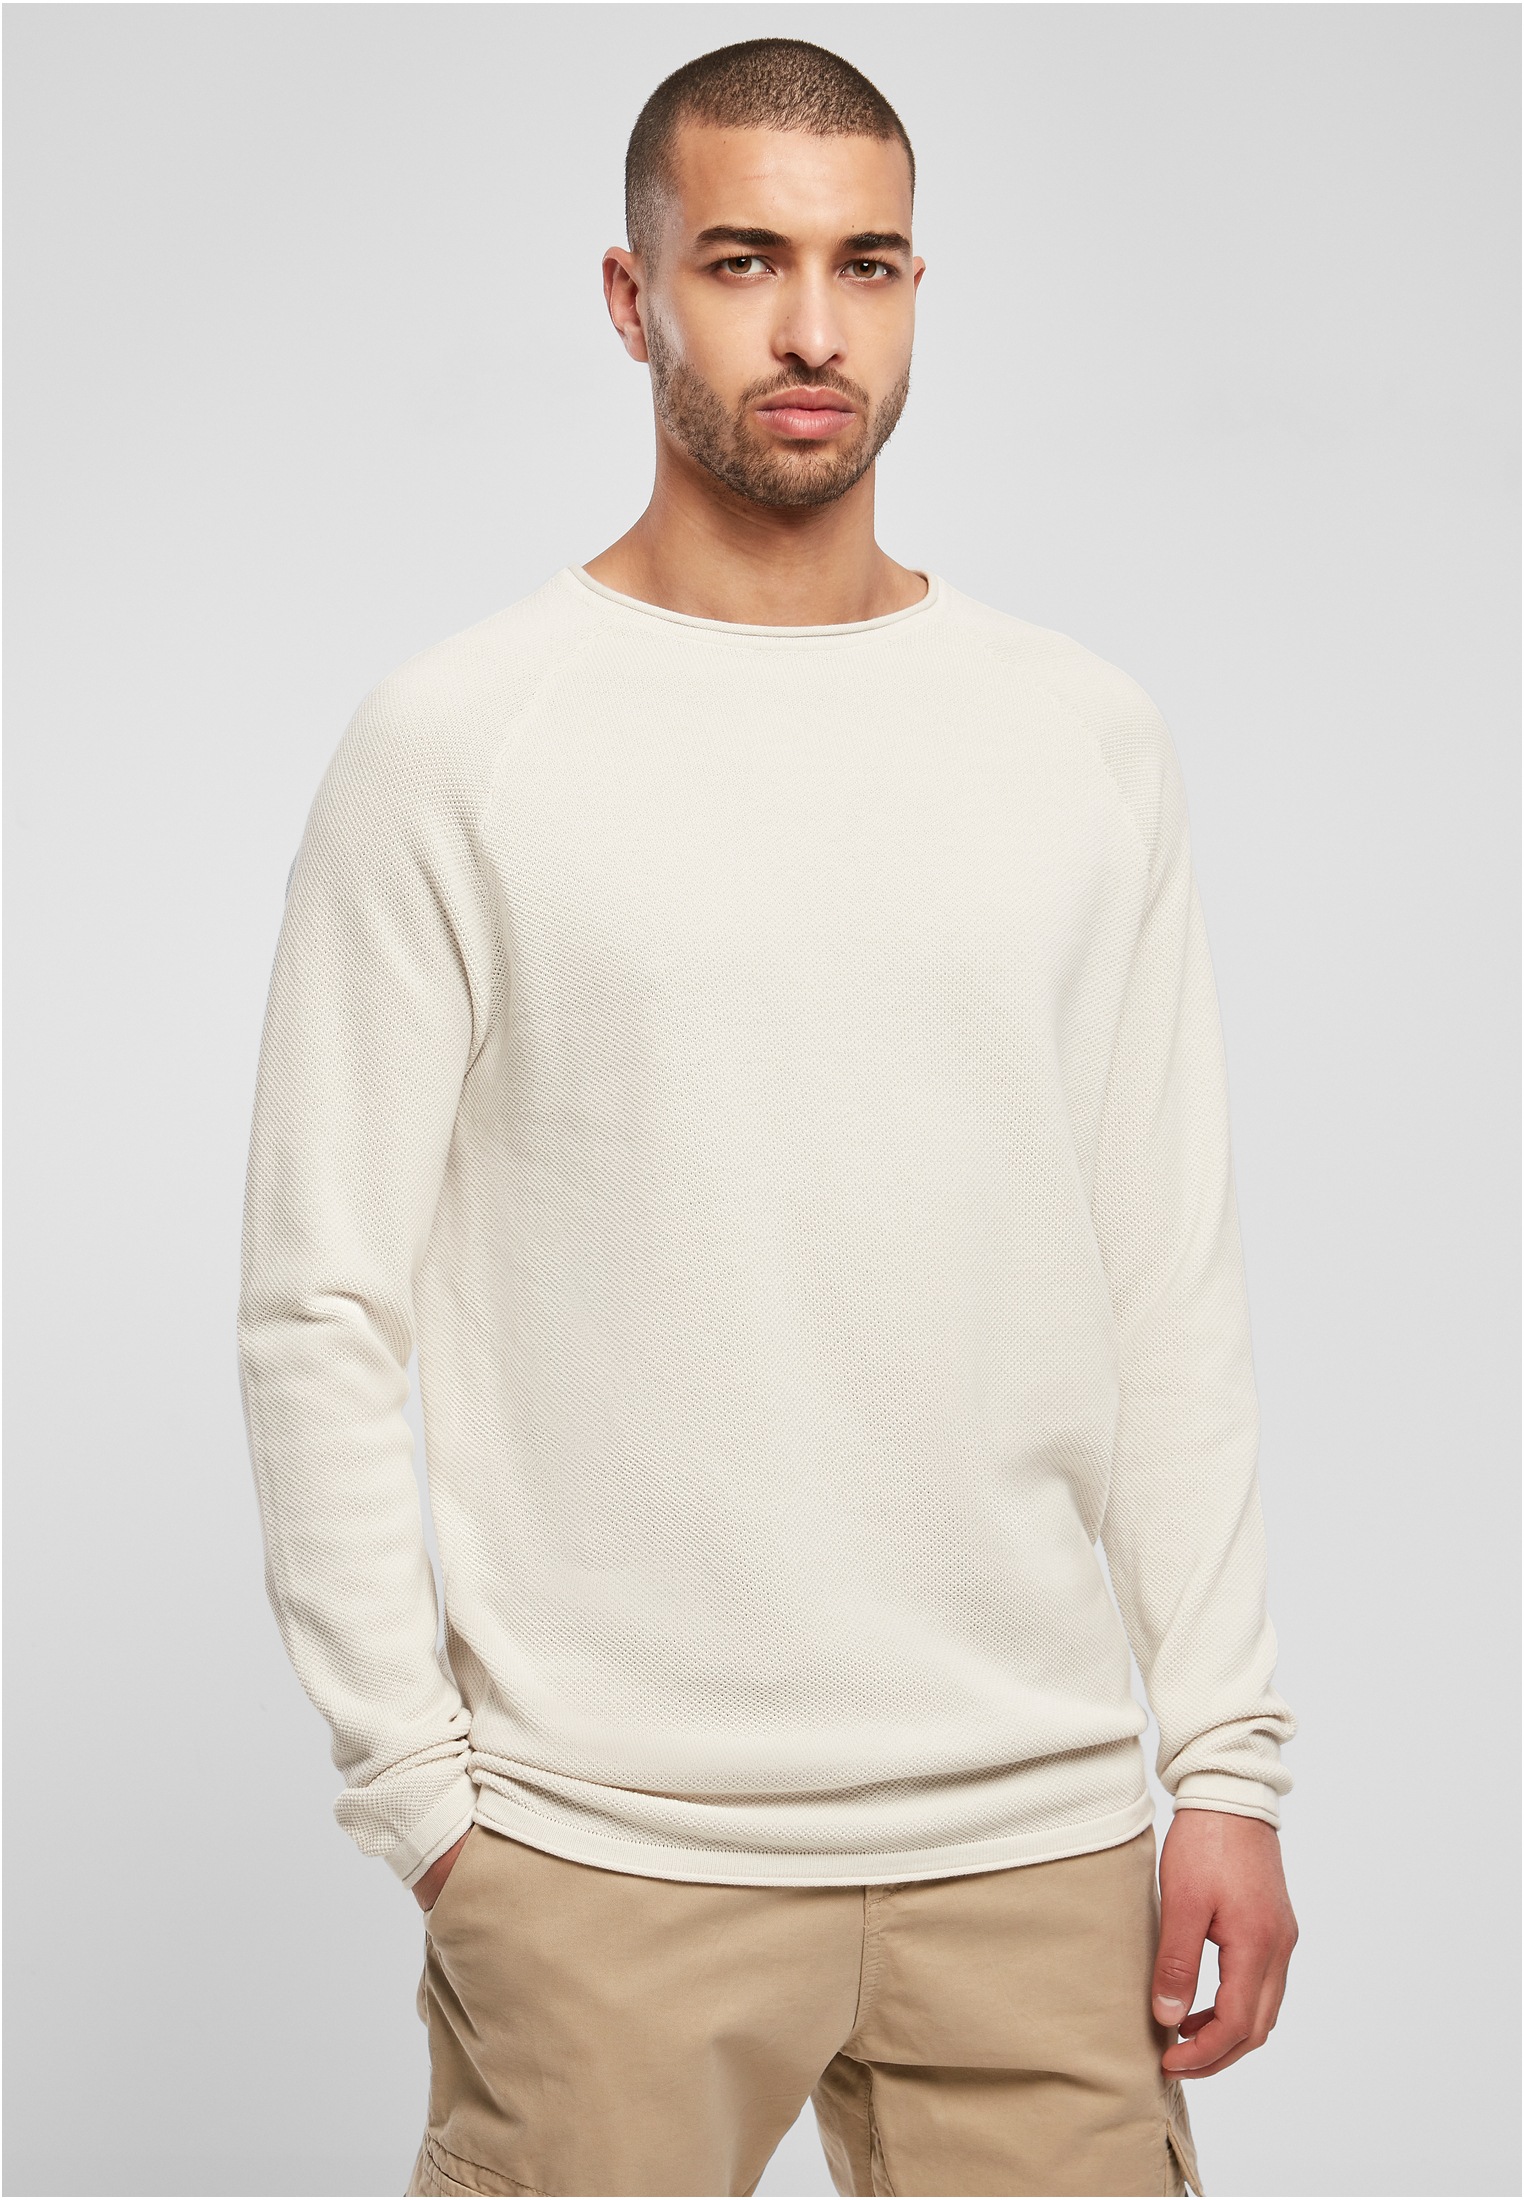 URBAN CLASSICS Raglan Longsleeve«, tlg.) kaufen »Herren (1 T-Shirt Knitted